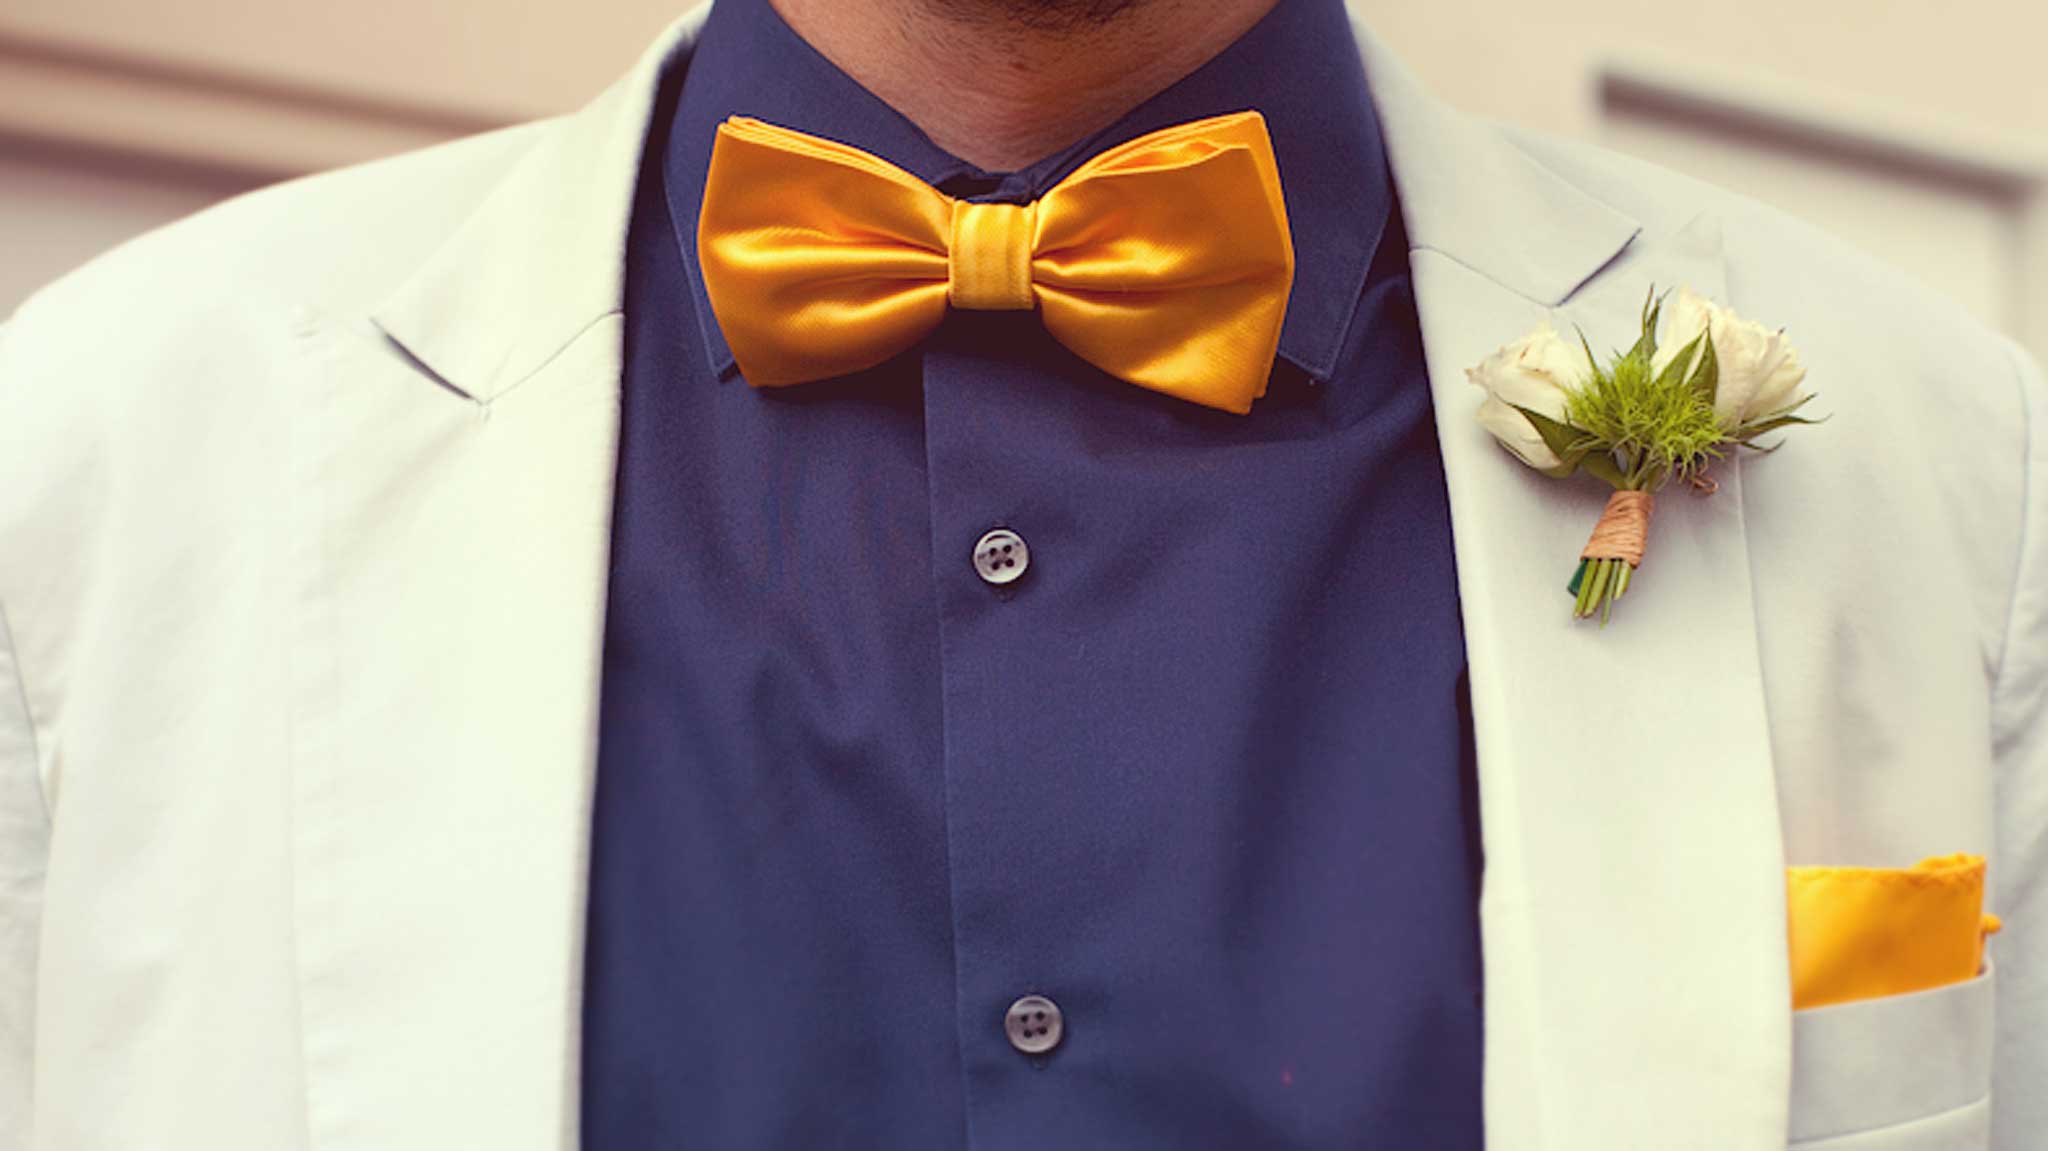 detail-gentle-studio-photographe-mariage-costume-groom-vinatge-yellow-tie-noeud-papillon-jaune